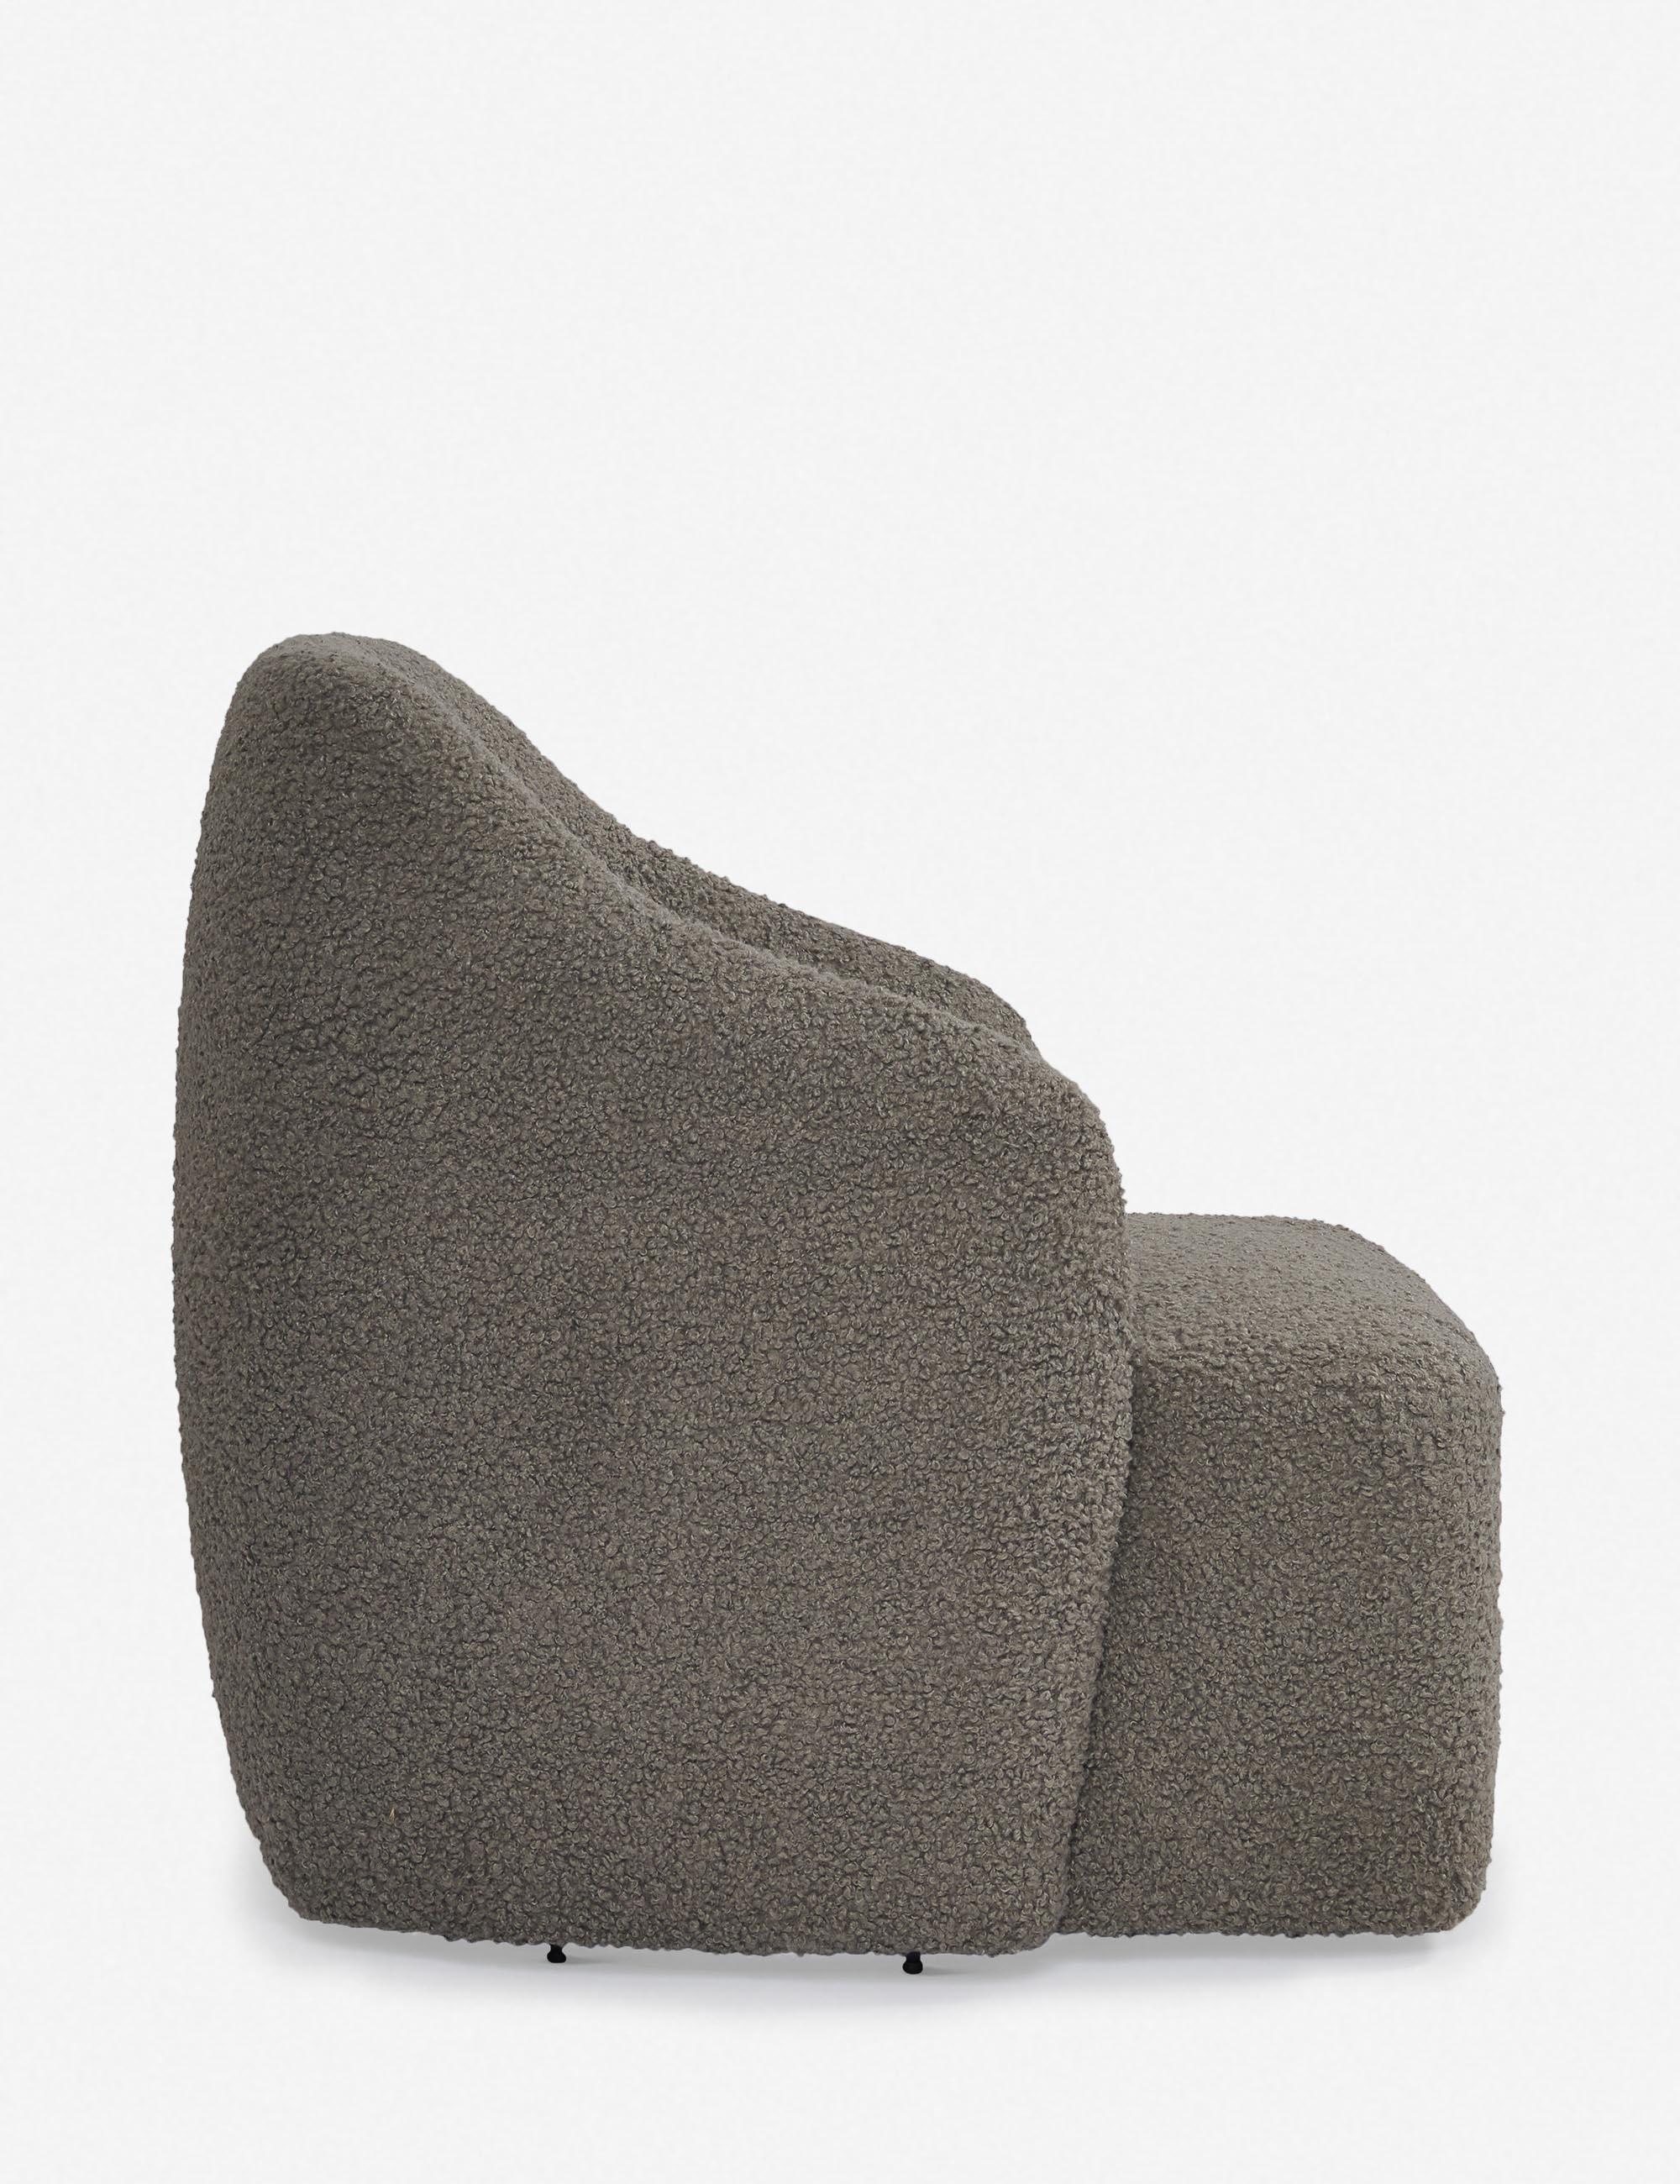 Tobi Swivel Chair - Image 2